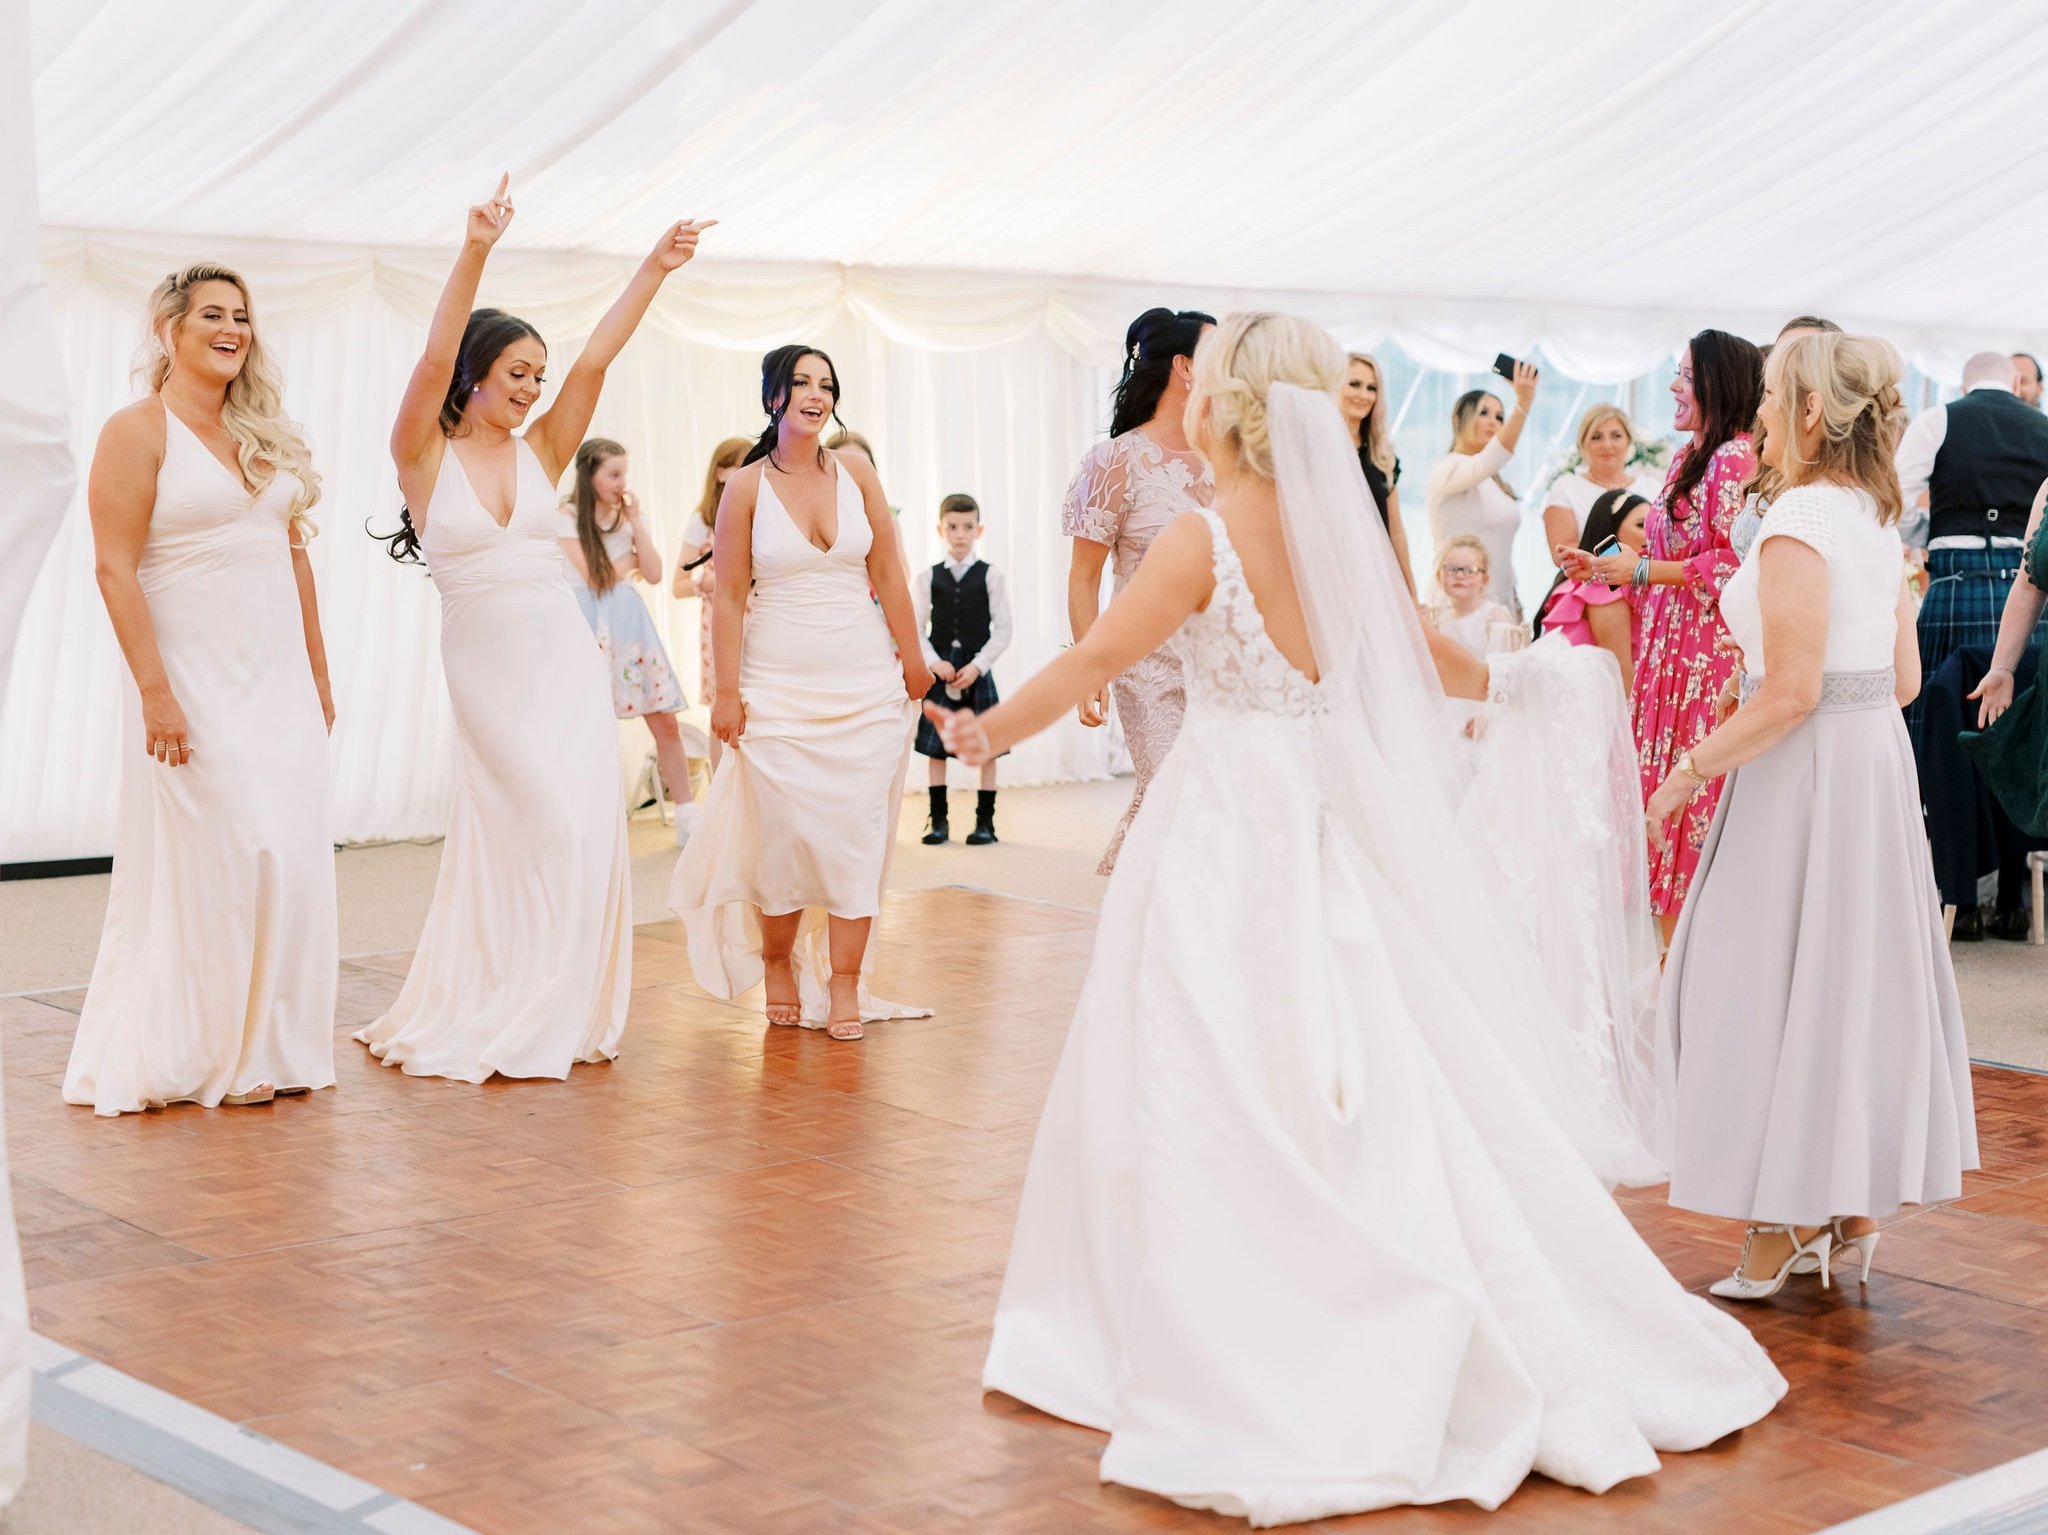 67_springkell-house-wedding-photographer-dumfries-scotland-busy-dancefloor.jpg